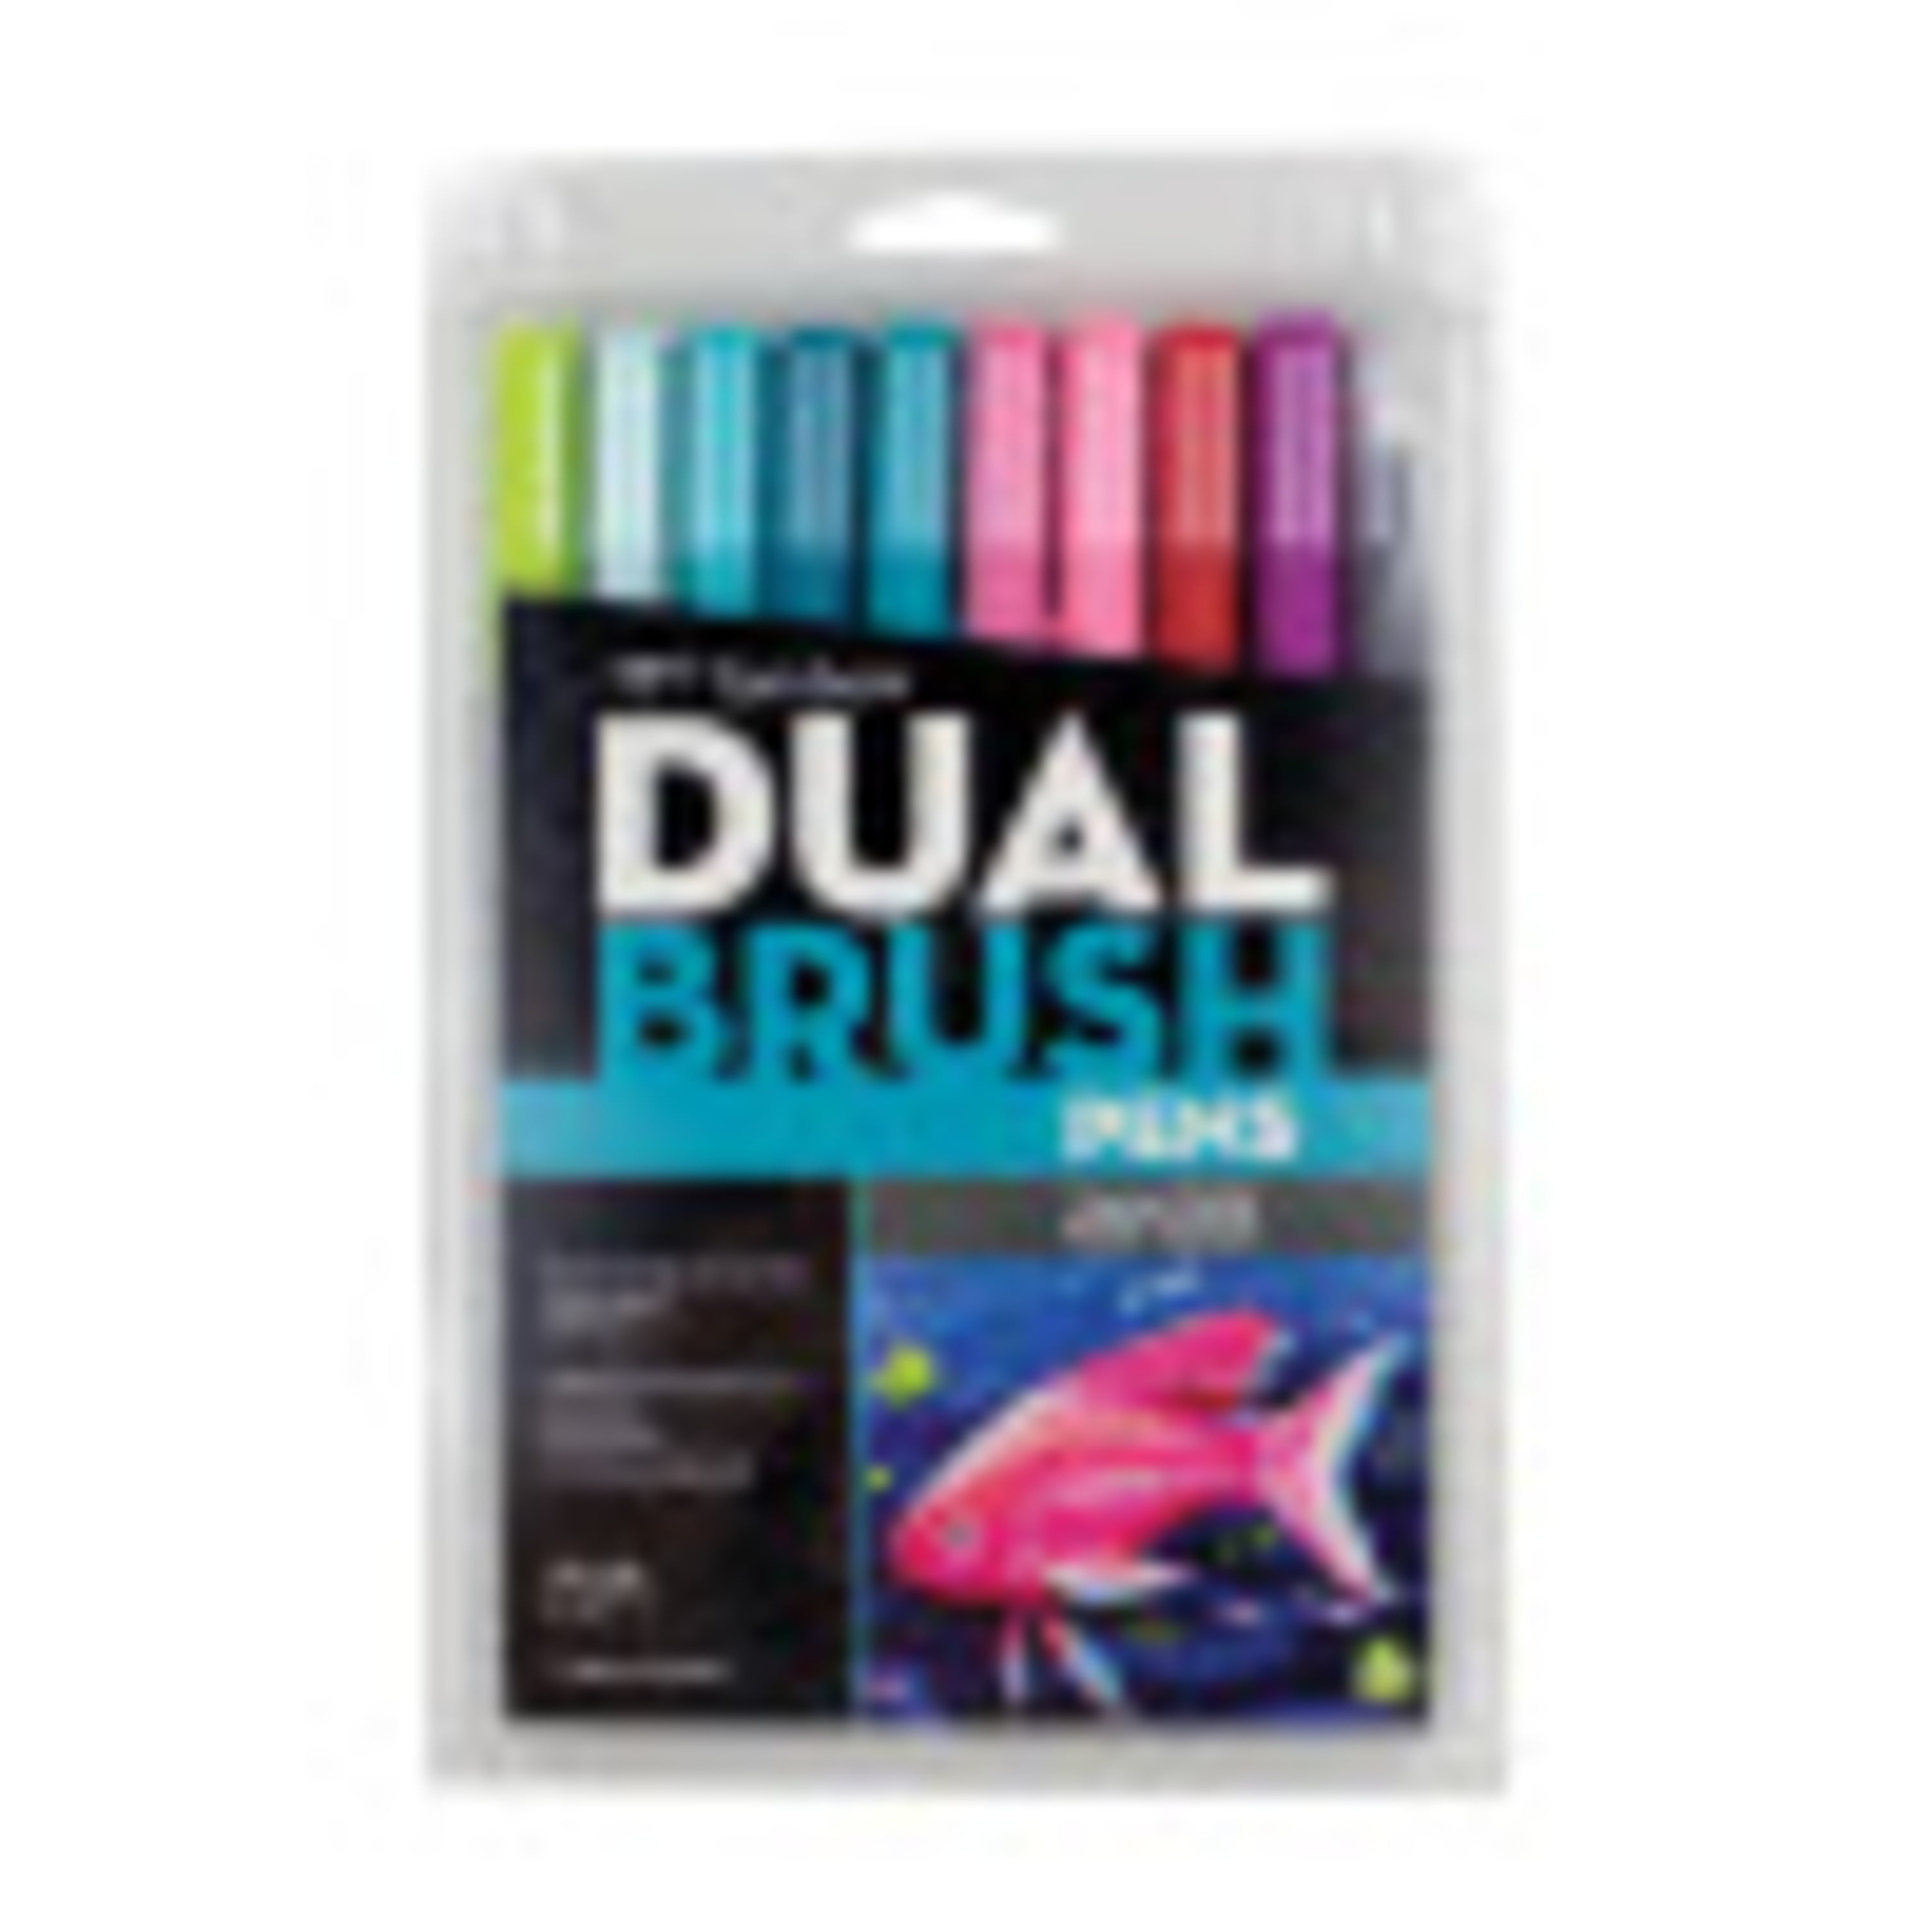 Tombow Dual Brush Pen Set of 20- Neutral Palette